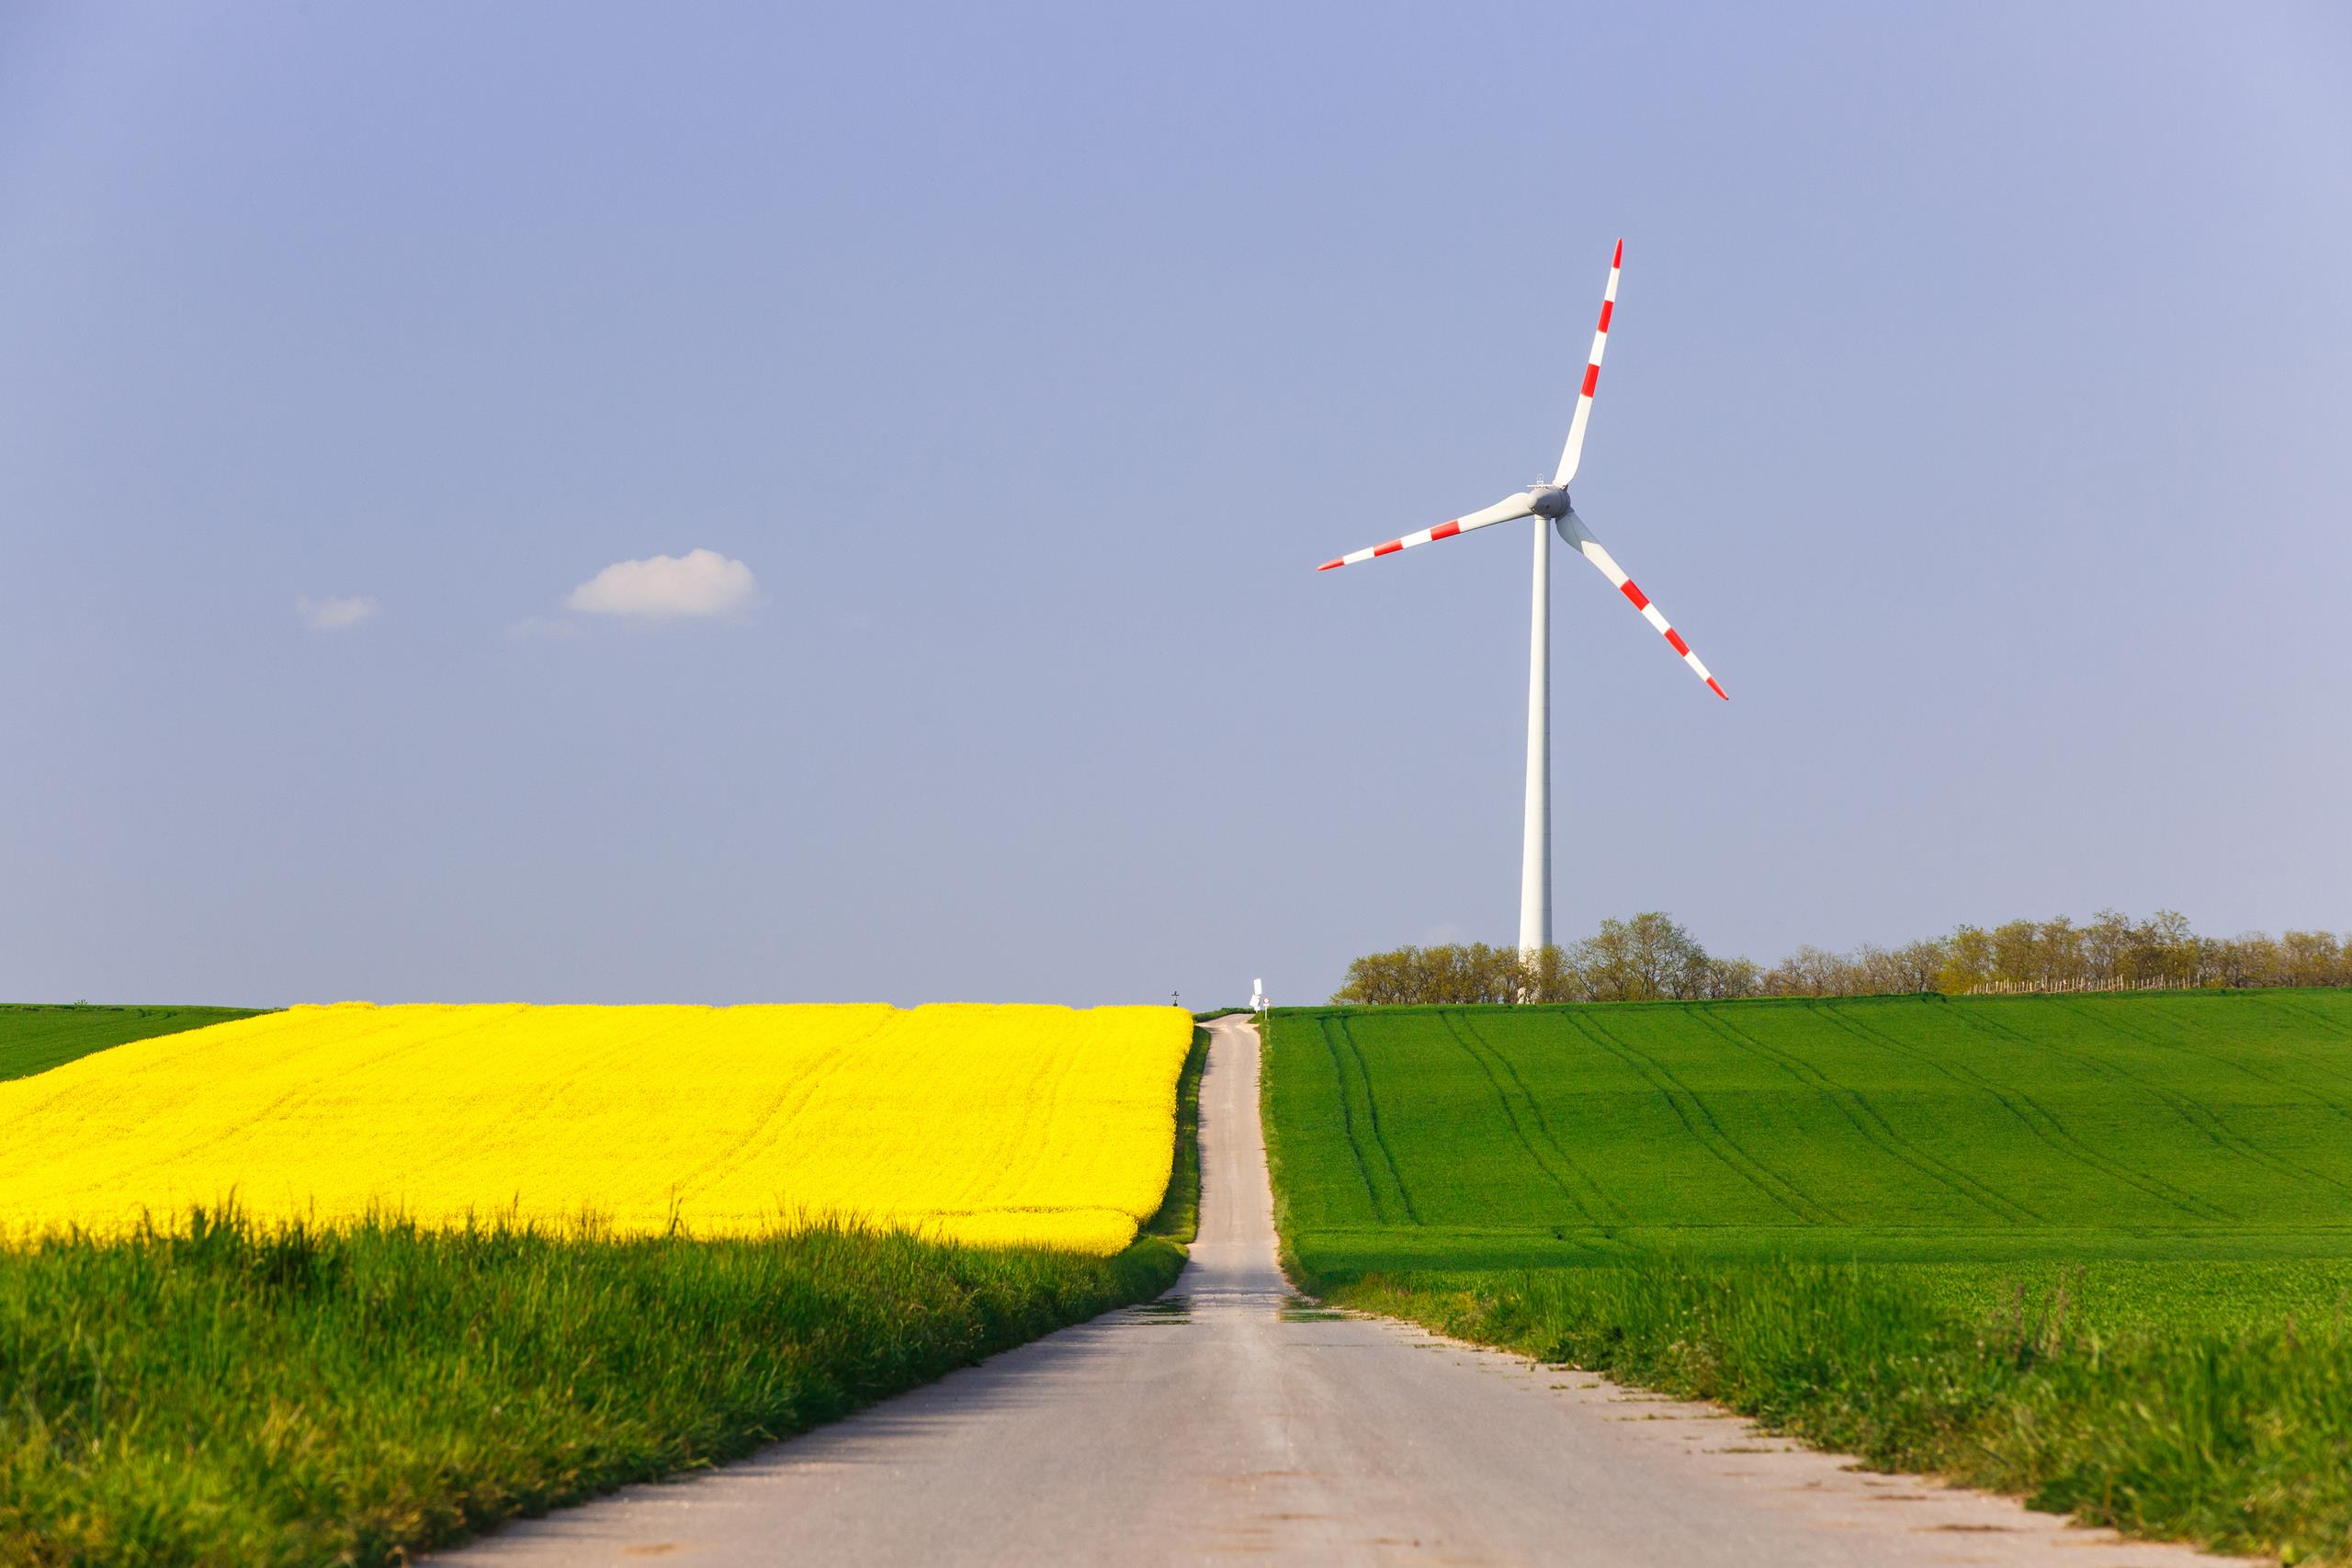 Wind farm with spinning wind turbine